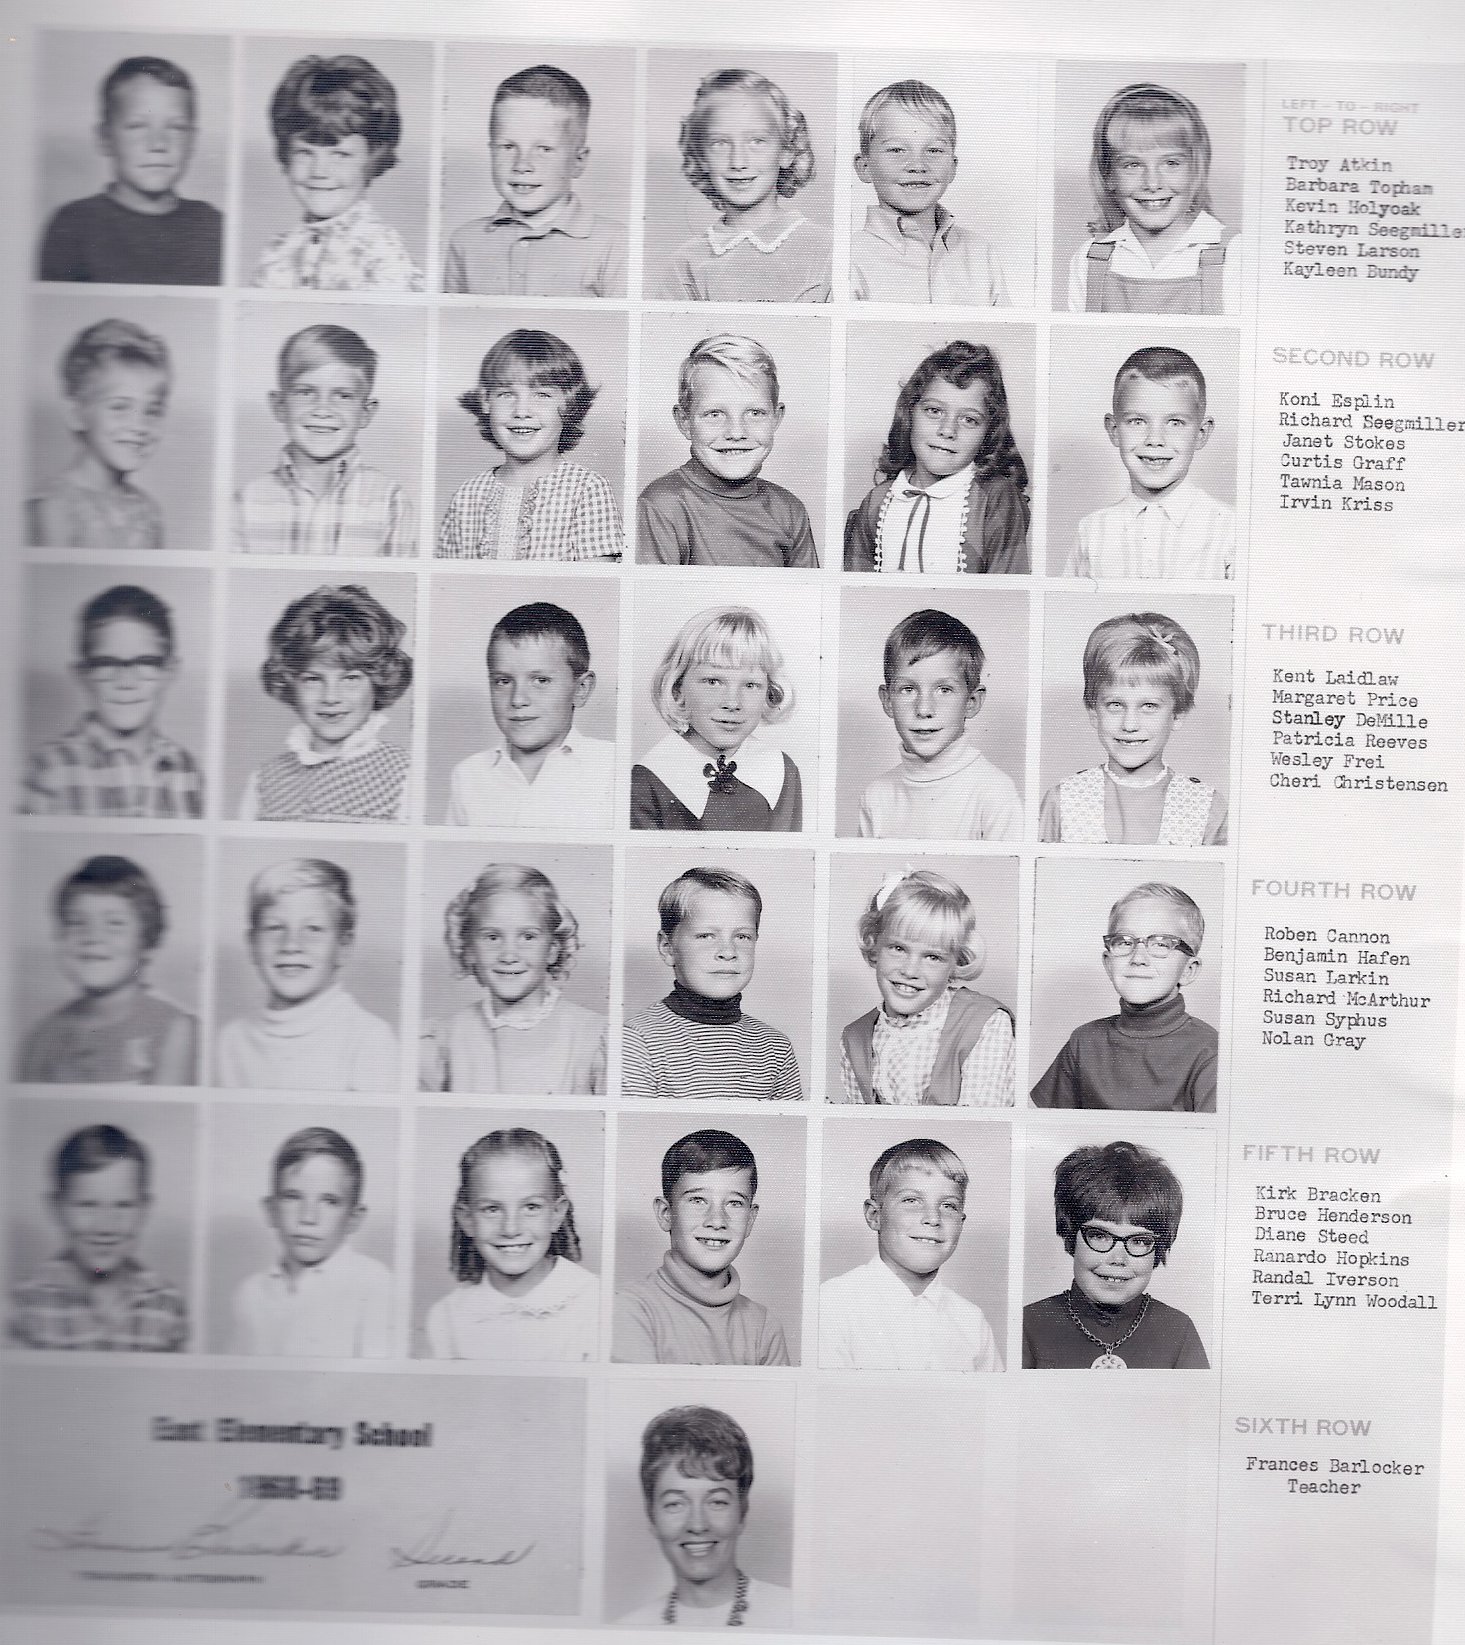 Mrs. Frances Barlocker's 1968-1969 second grade class at East Elementary School